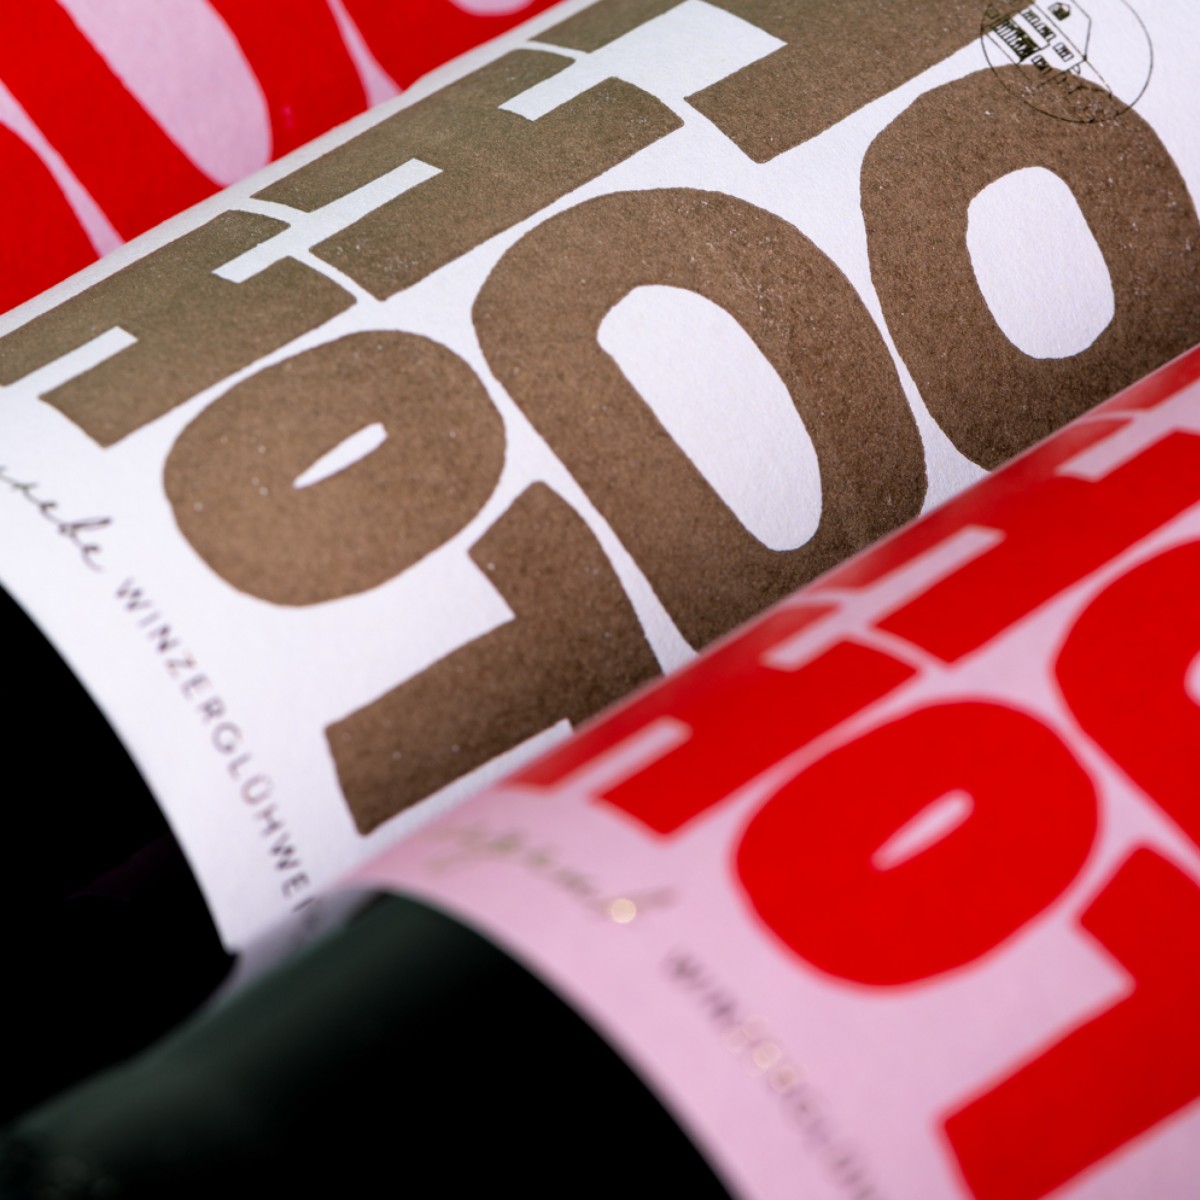 HO HO HOT – gemischtes Glühweinpaket (rot & weiß) vom Weingut Krughof - 6er-/12er Paket